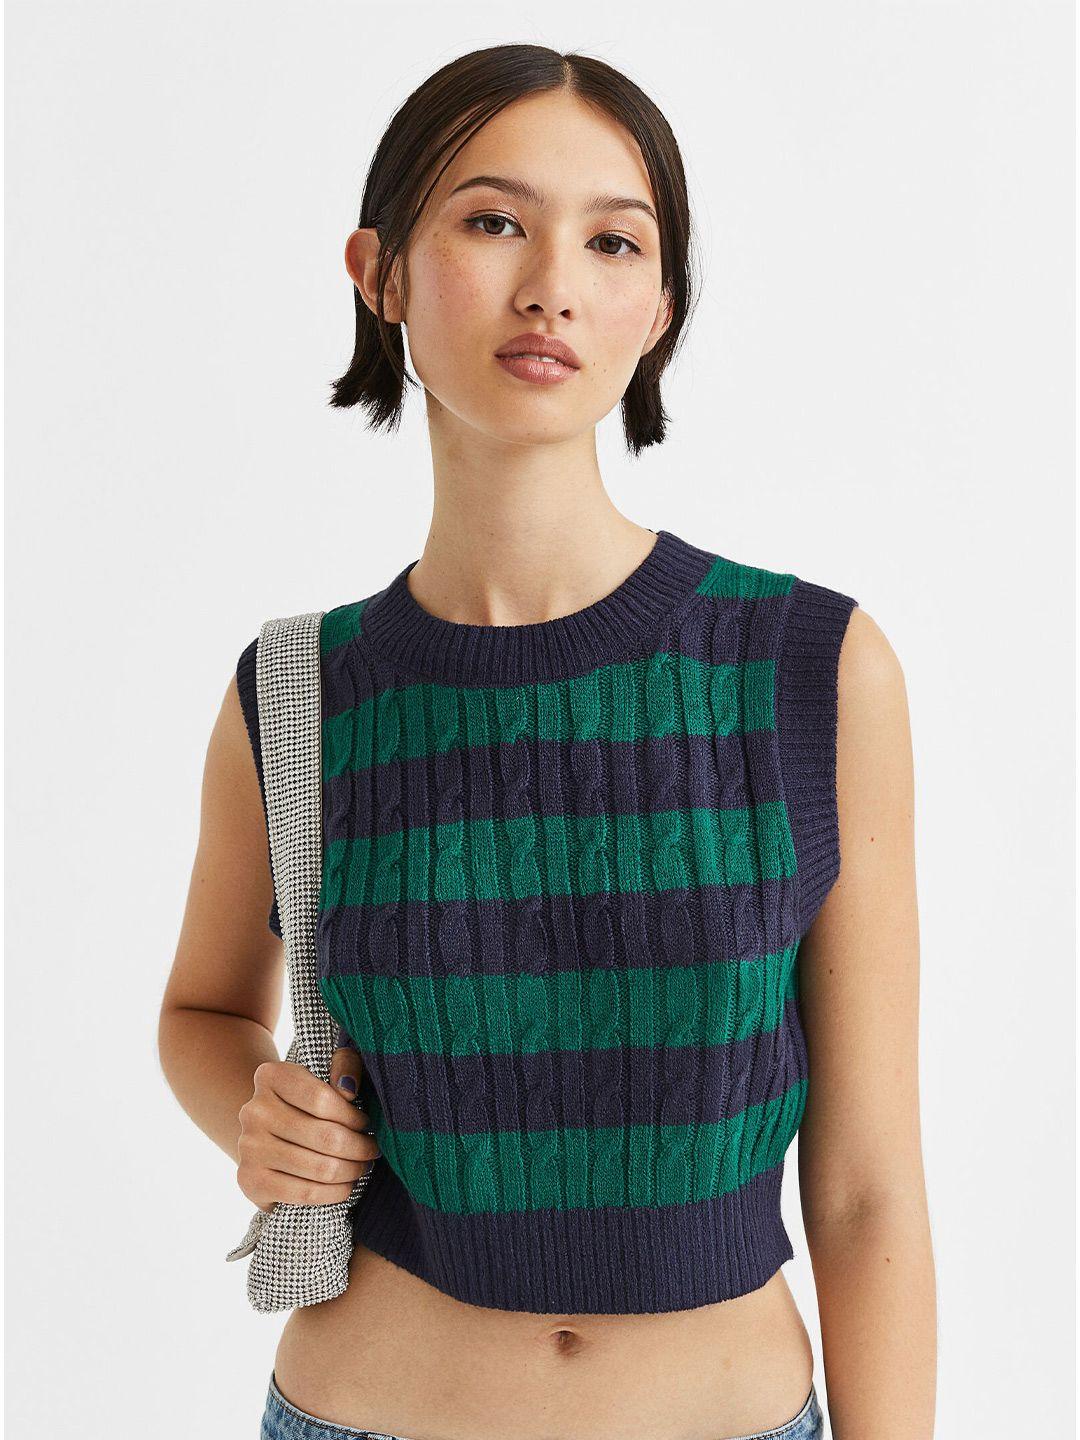 h&m women blue & green jacquard-knit sweater vest